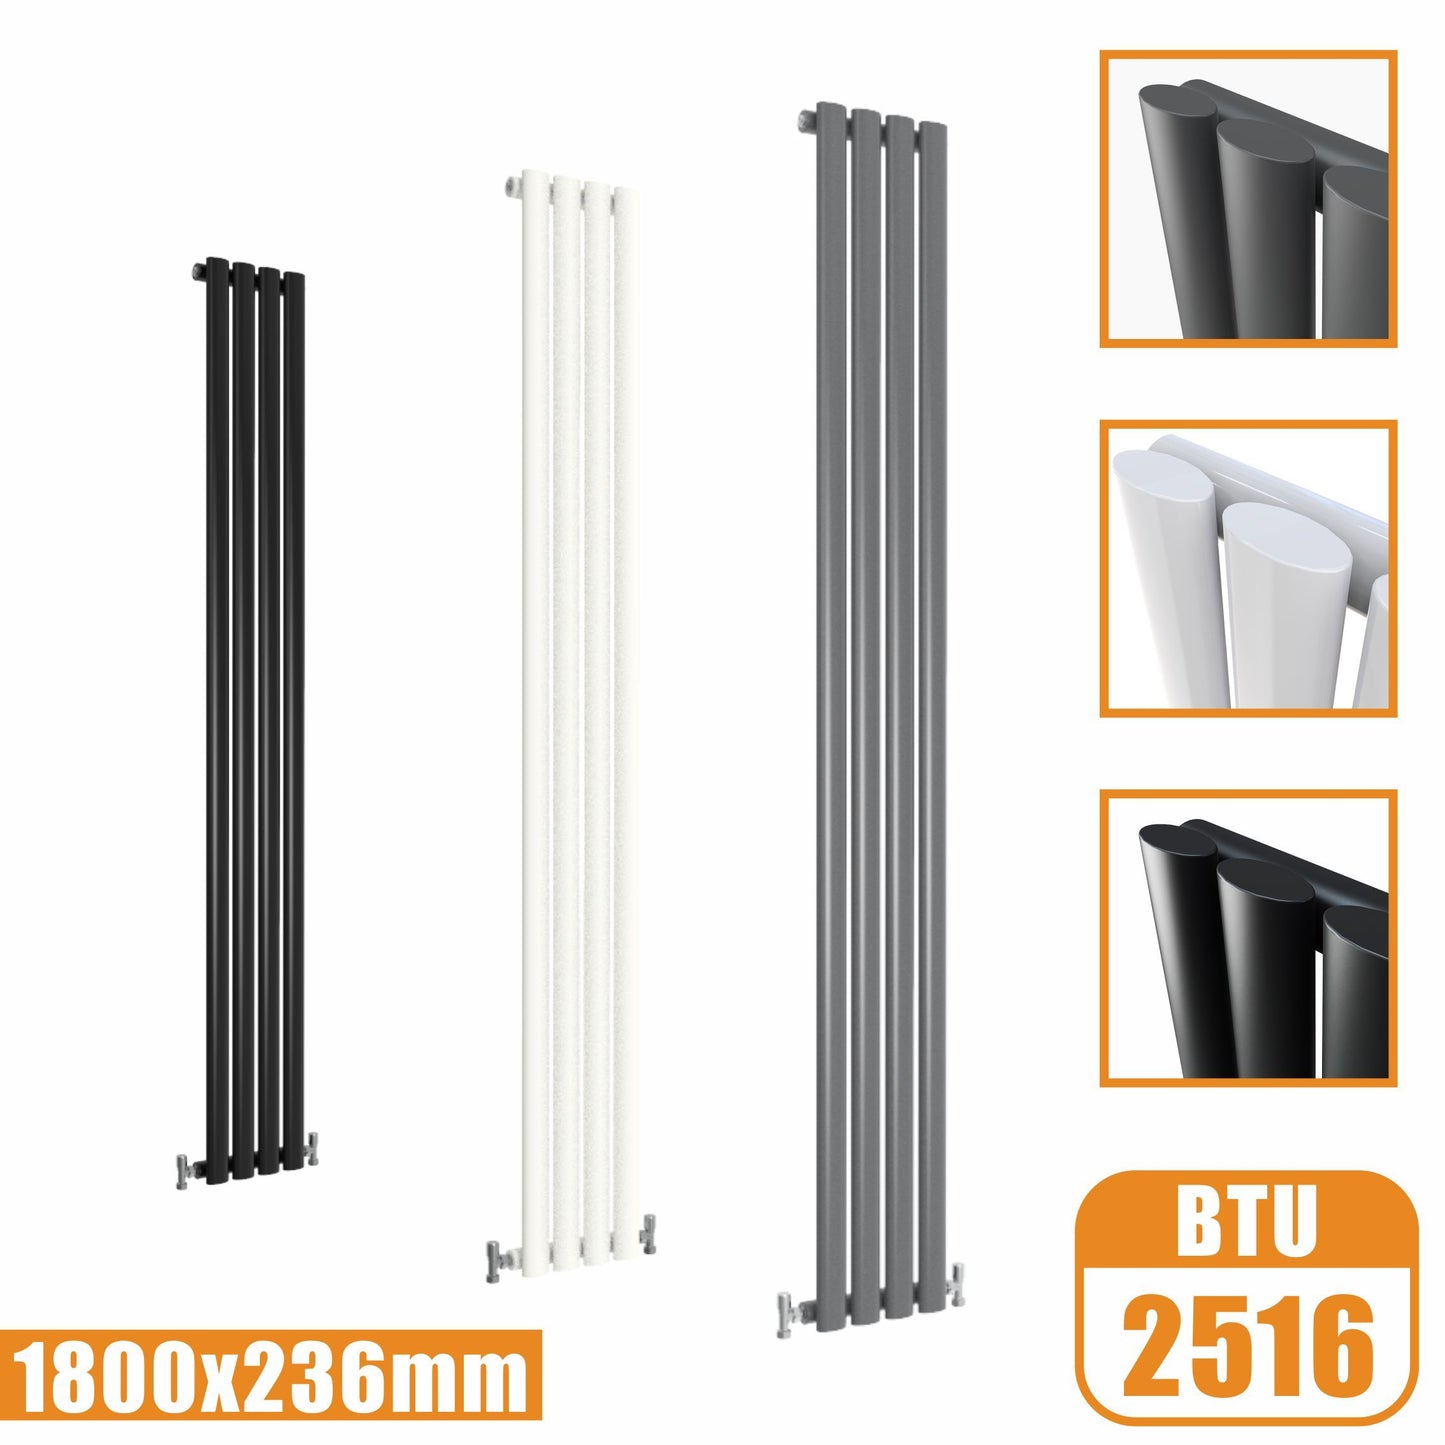 1800x236 vertical,oval column,radiators AICA rads